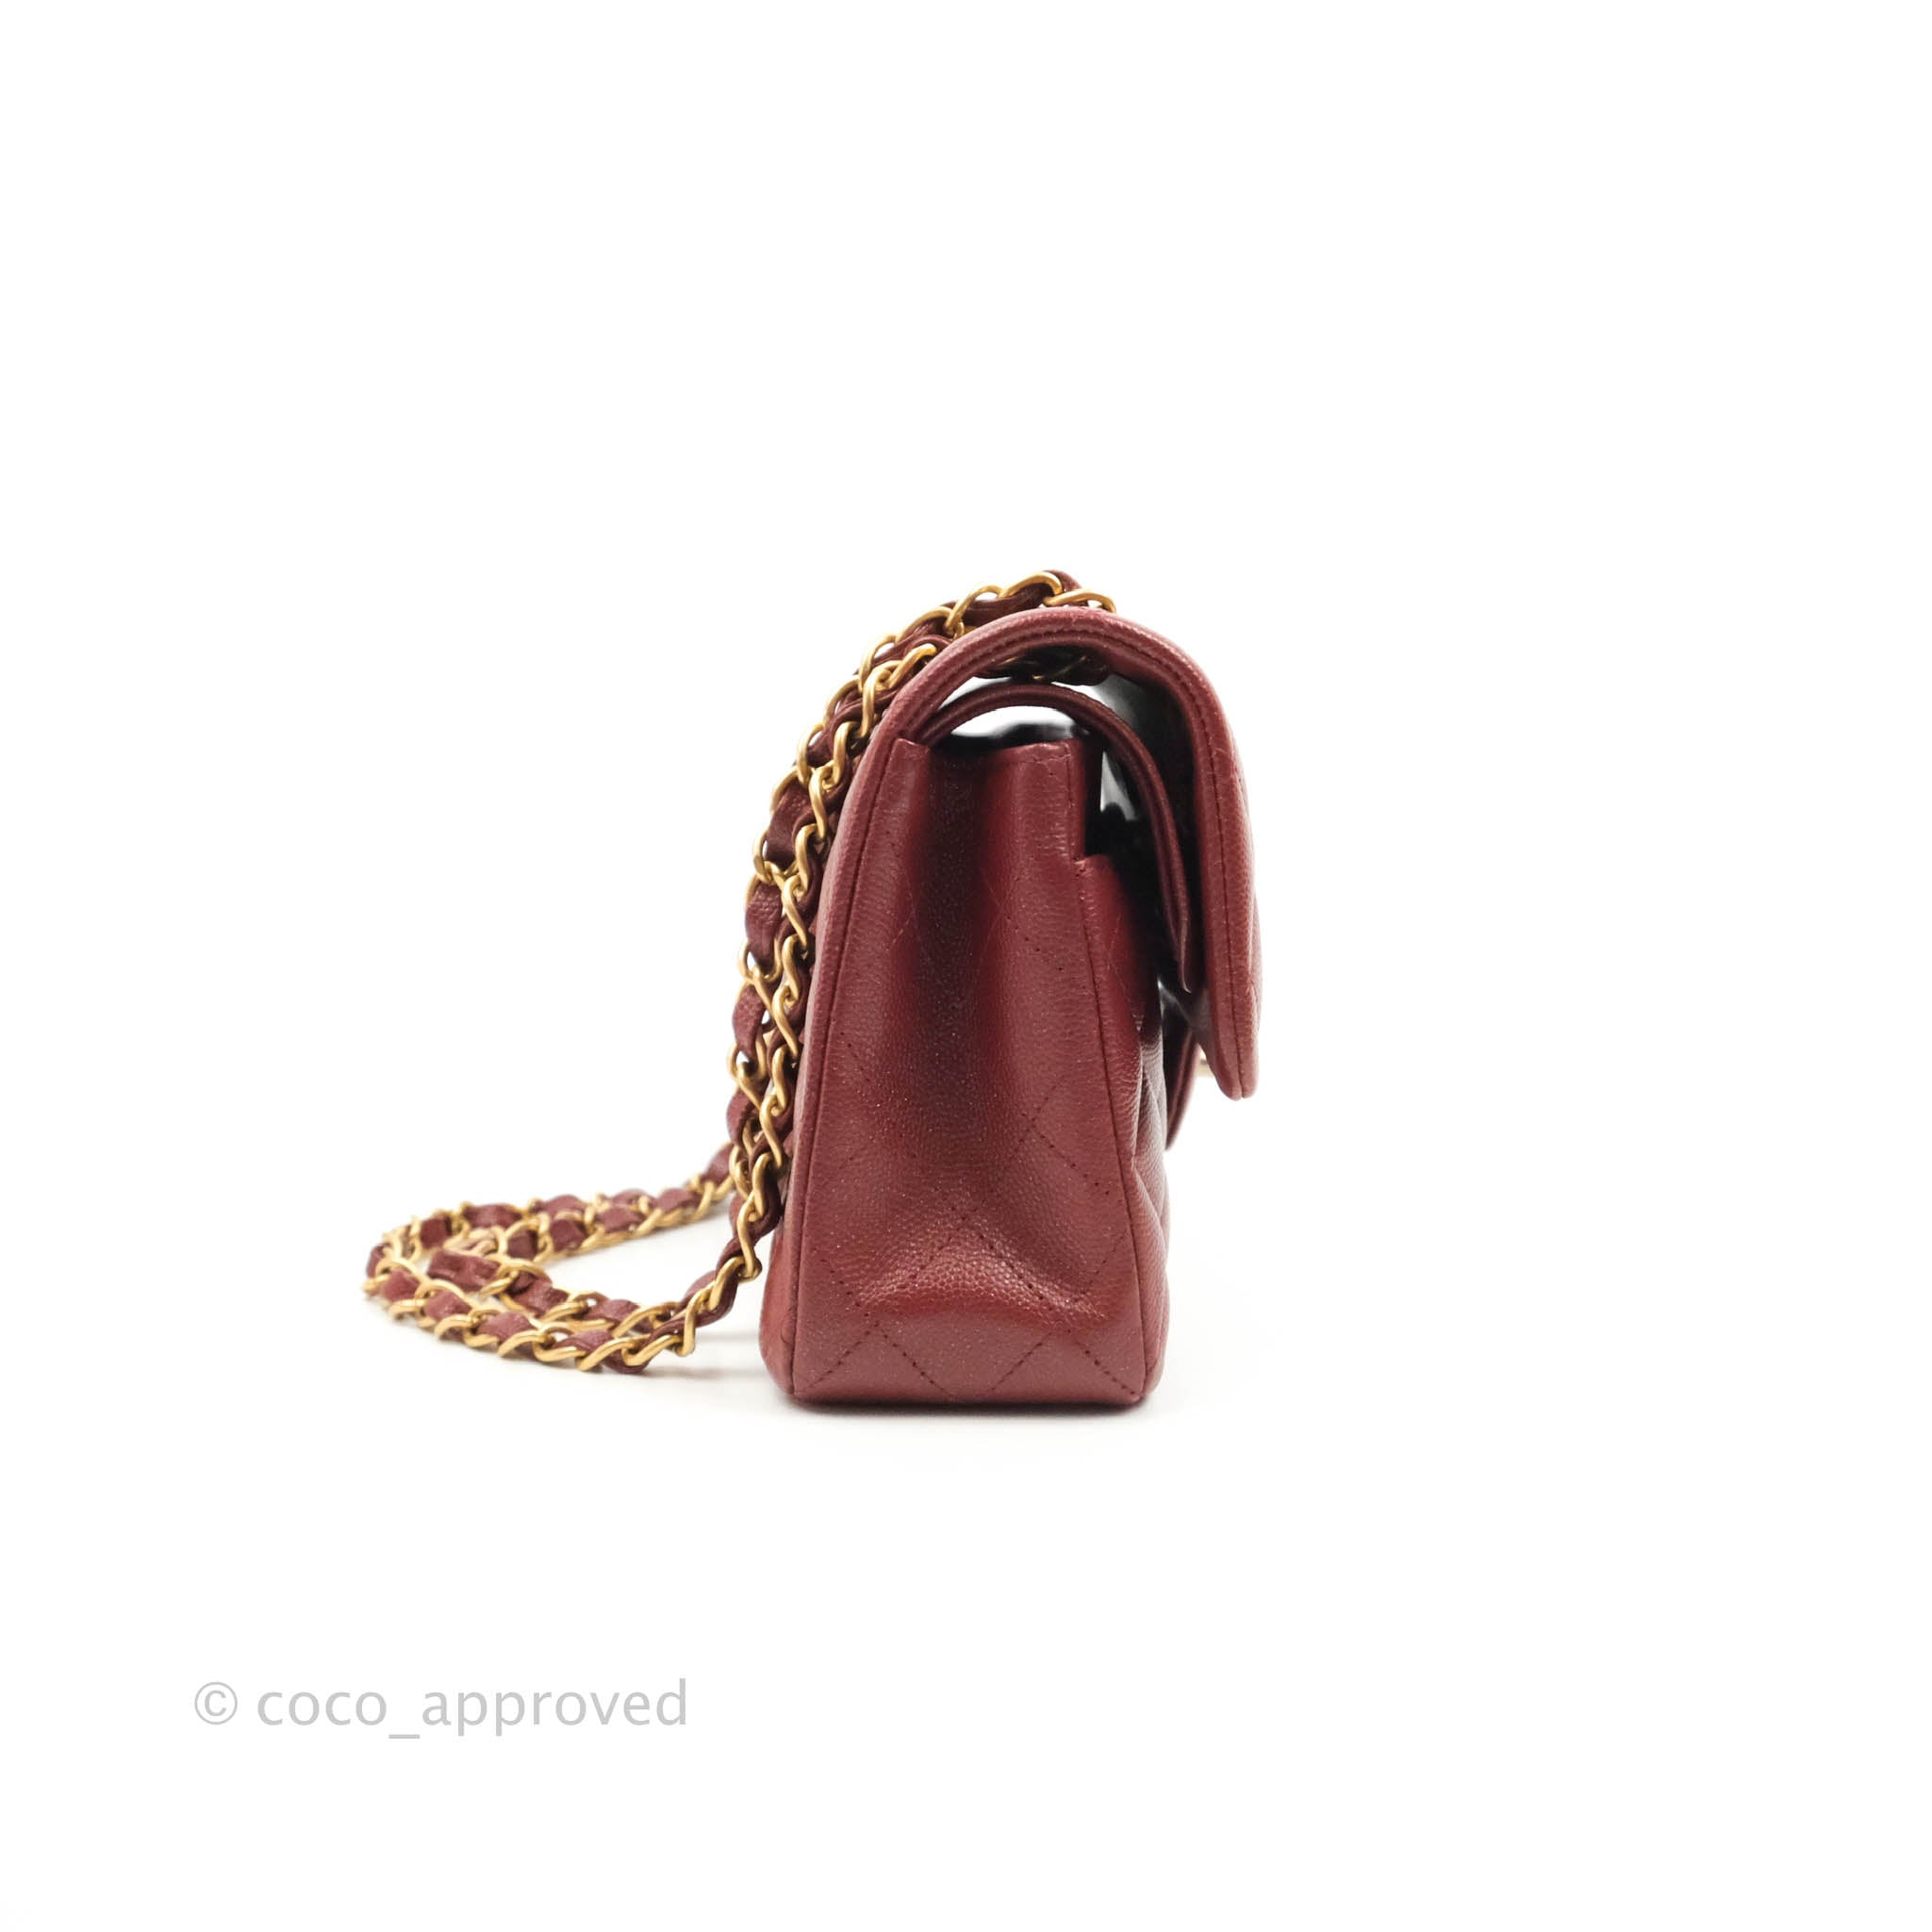 brown chanel crossbody handbag